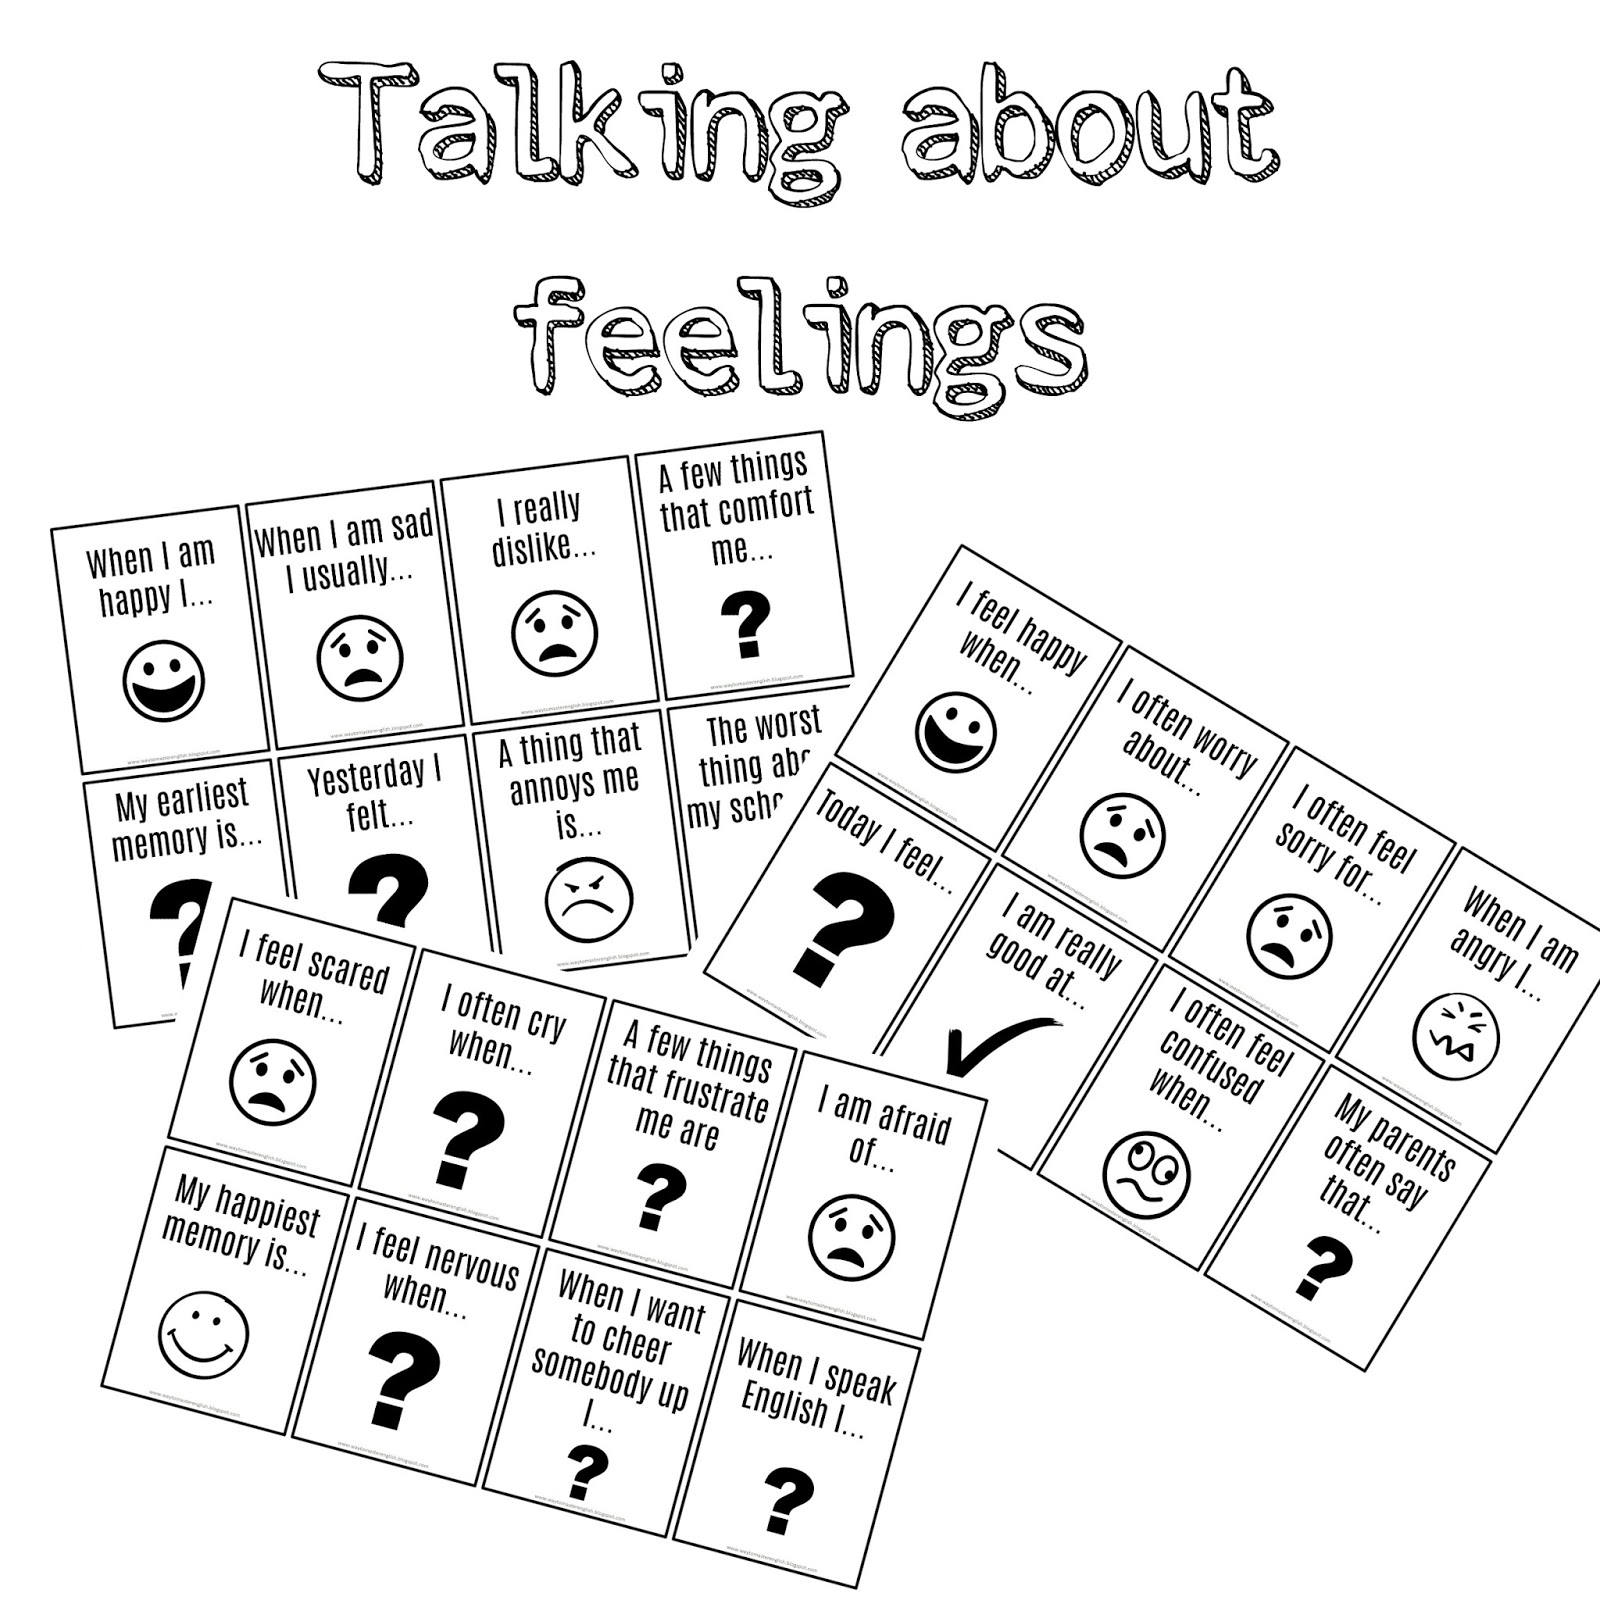 Talk about feelings. About feelings. Lagwagon Let's talk about feelings. Let's talk about emotions.